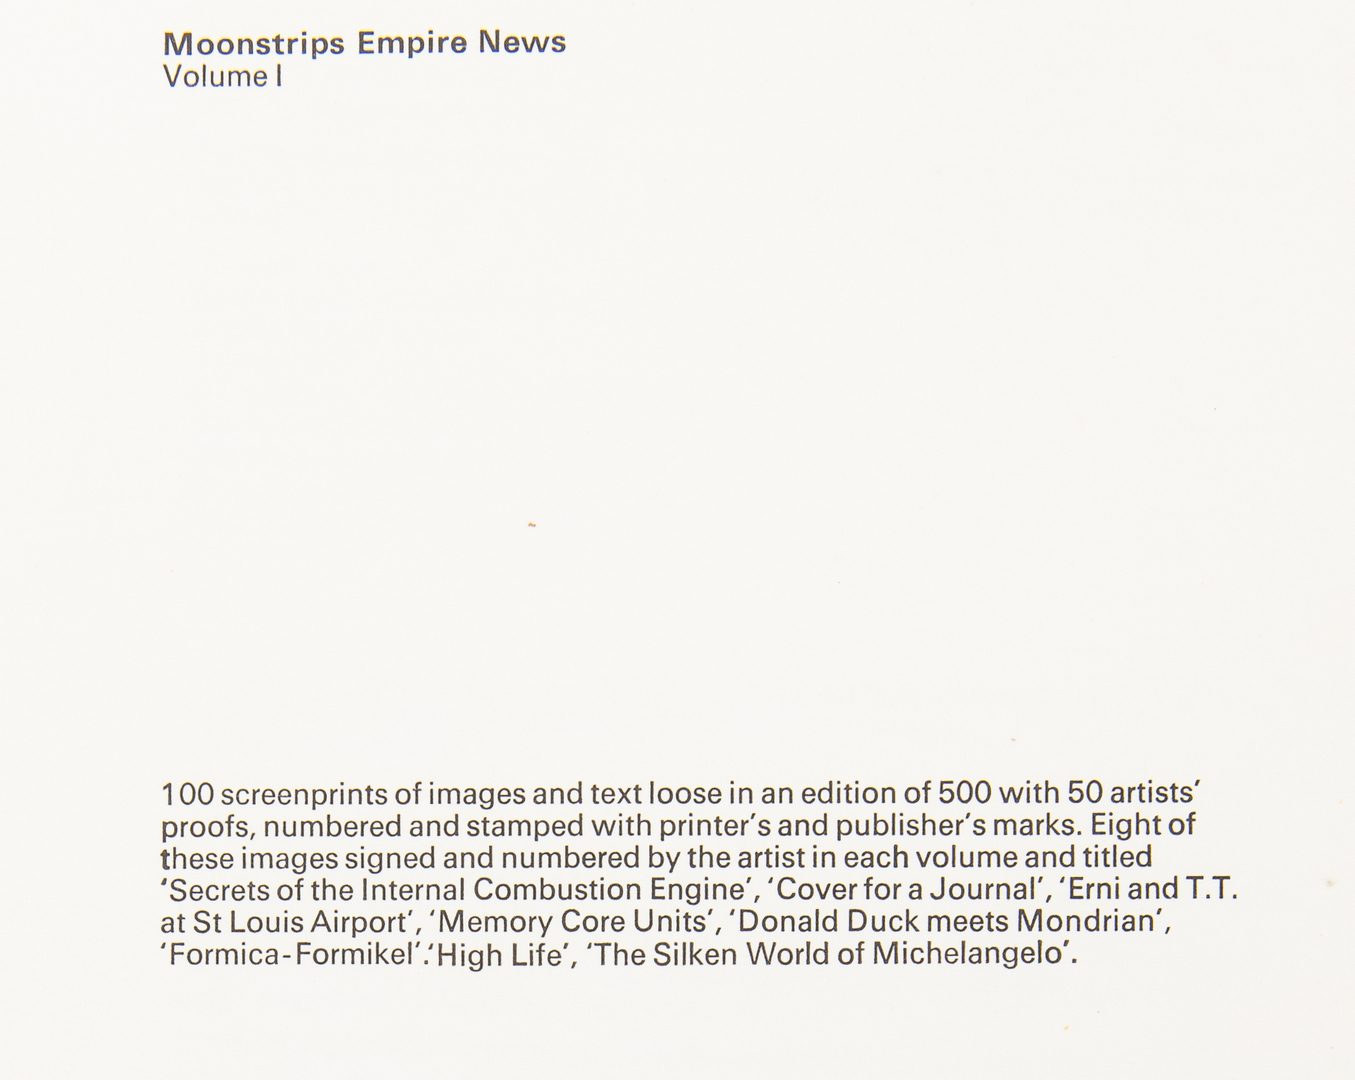 Lot 277: Edouardo Paolozzi "Moonstrips Empire News Vol. I" Portfolio, 1967